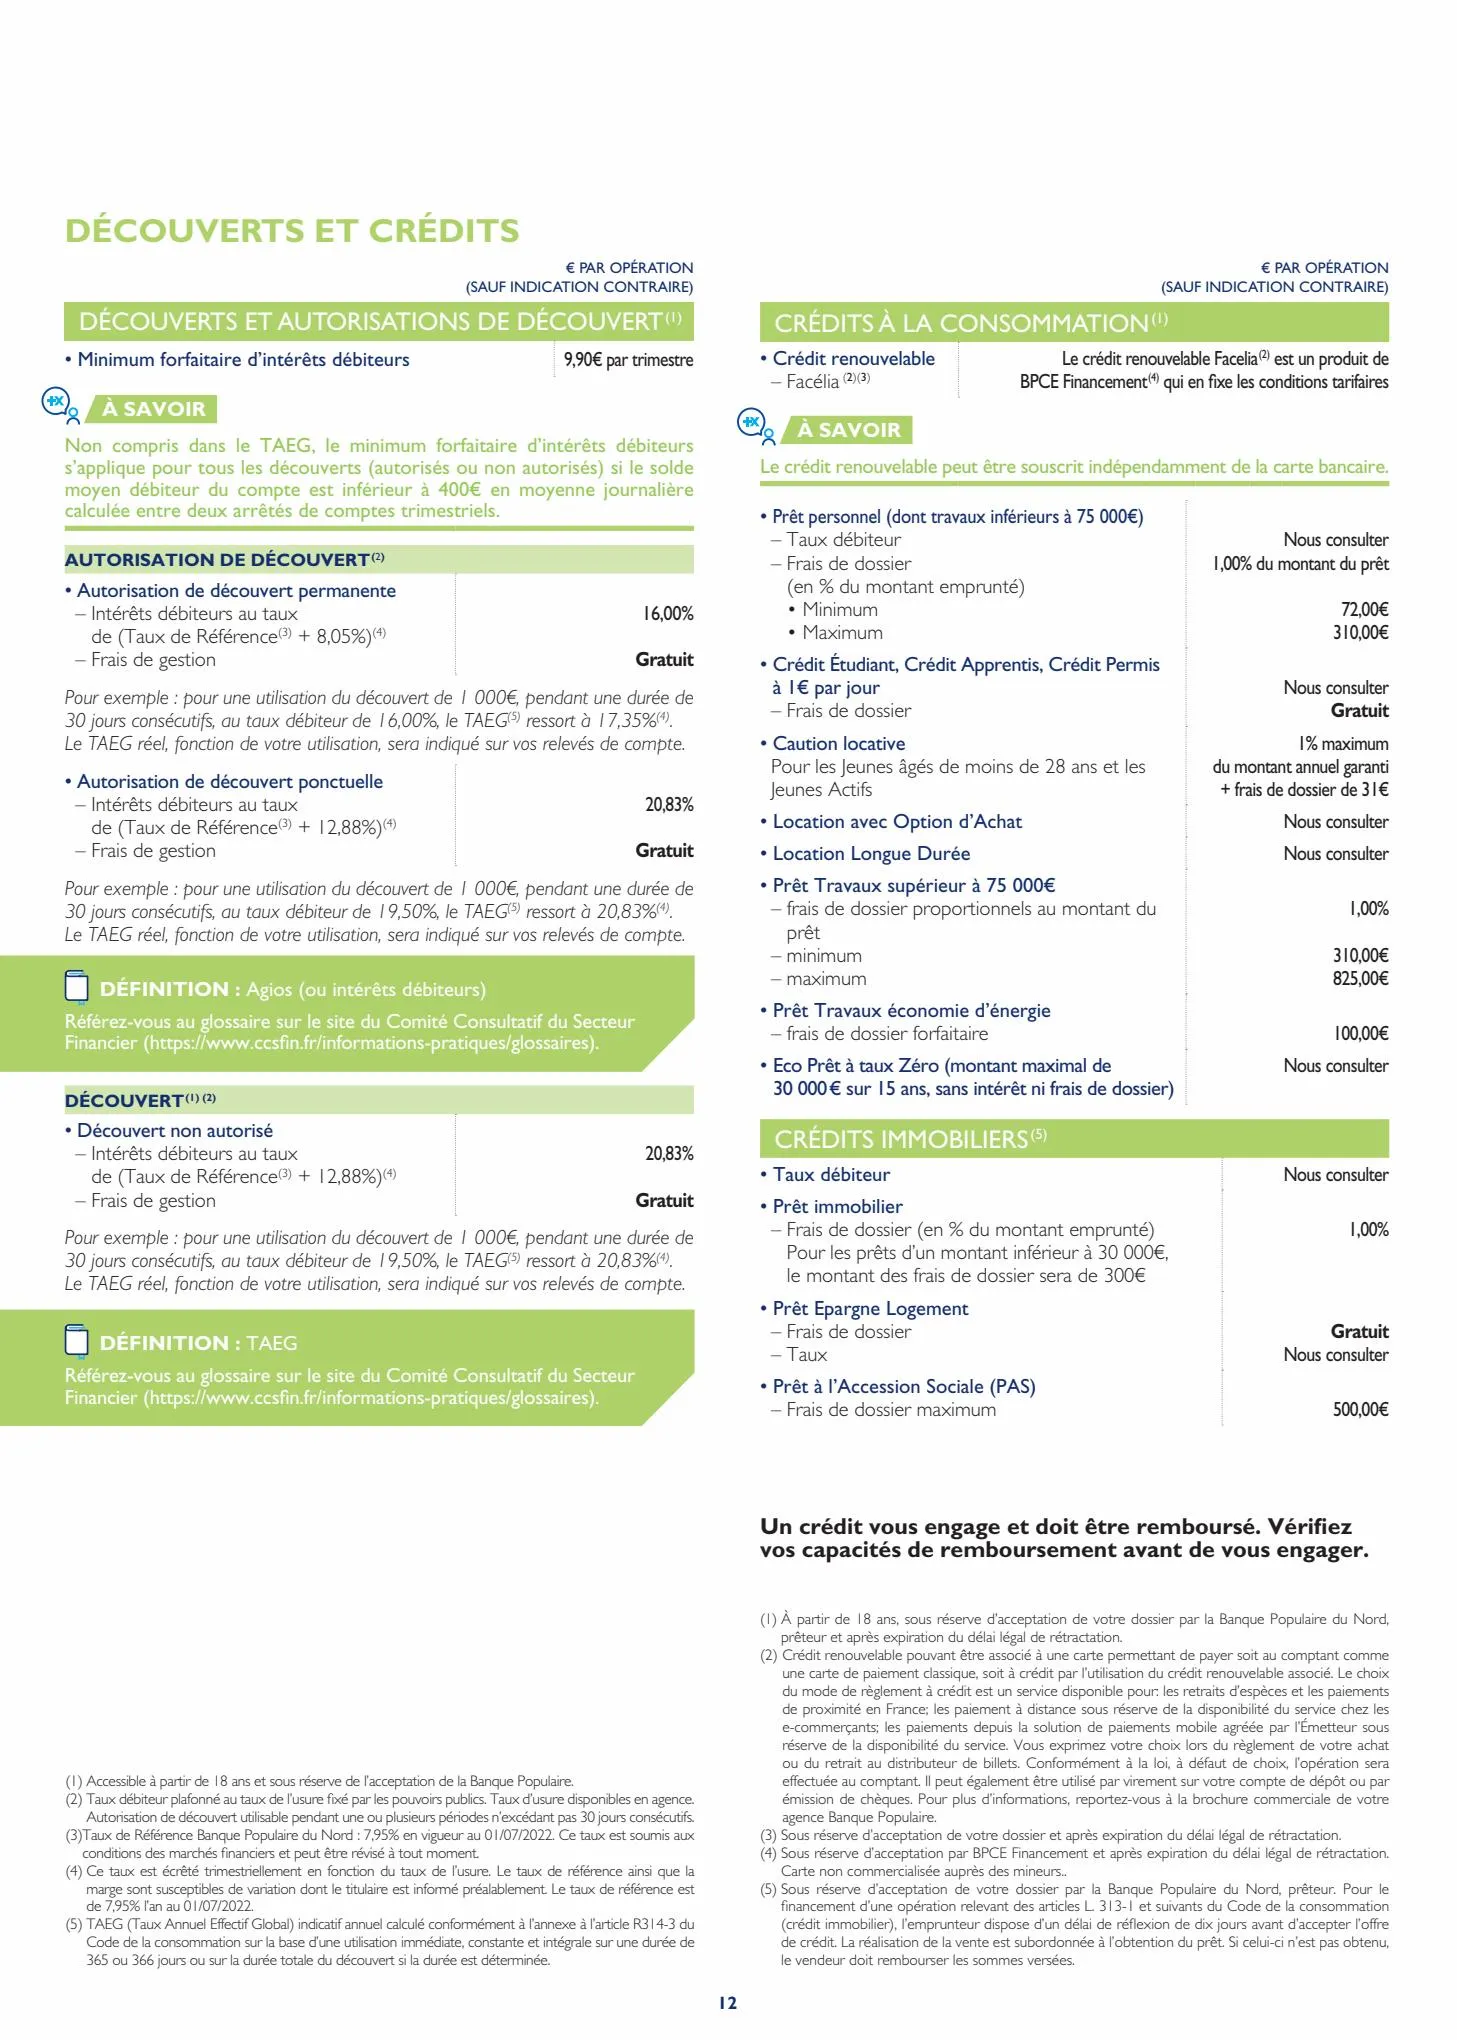 Catalogue Tarifs des operations et services bpnord particuliers 2023, page 00012